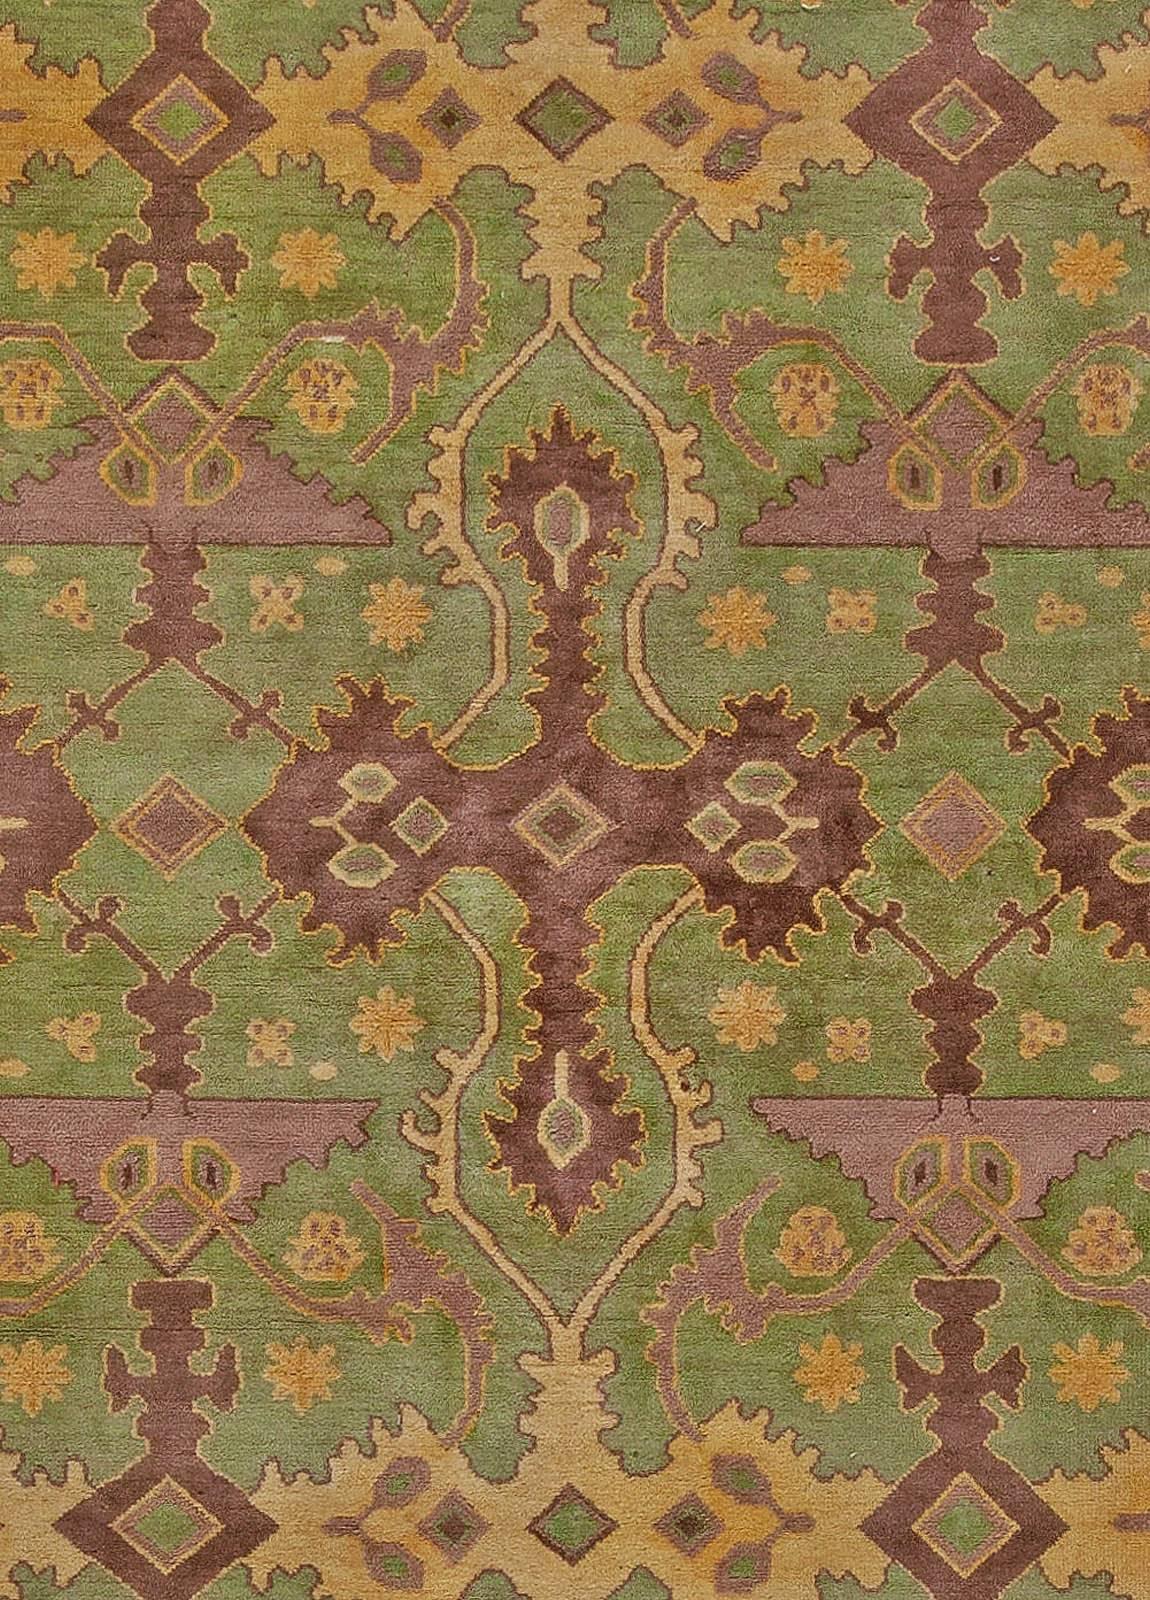 Vintage geometric green, purple Chinese handmade wool rug
Size: 13'5